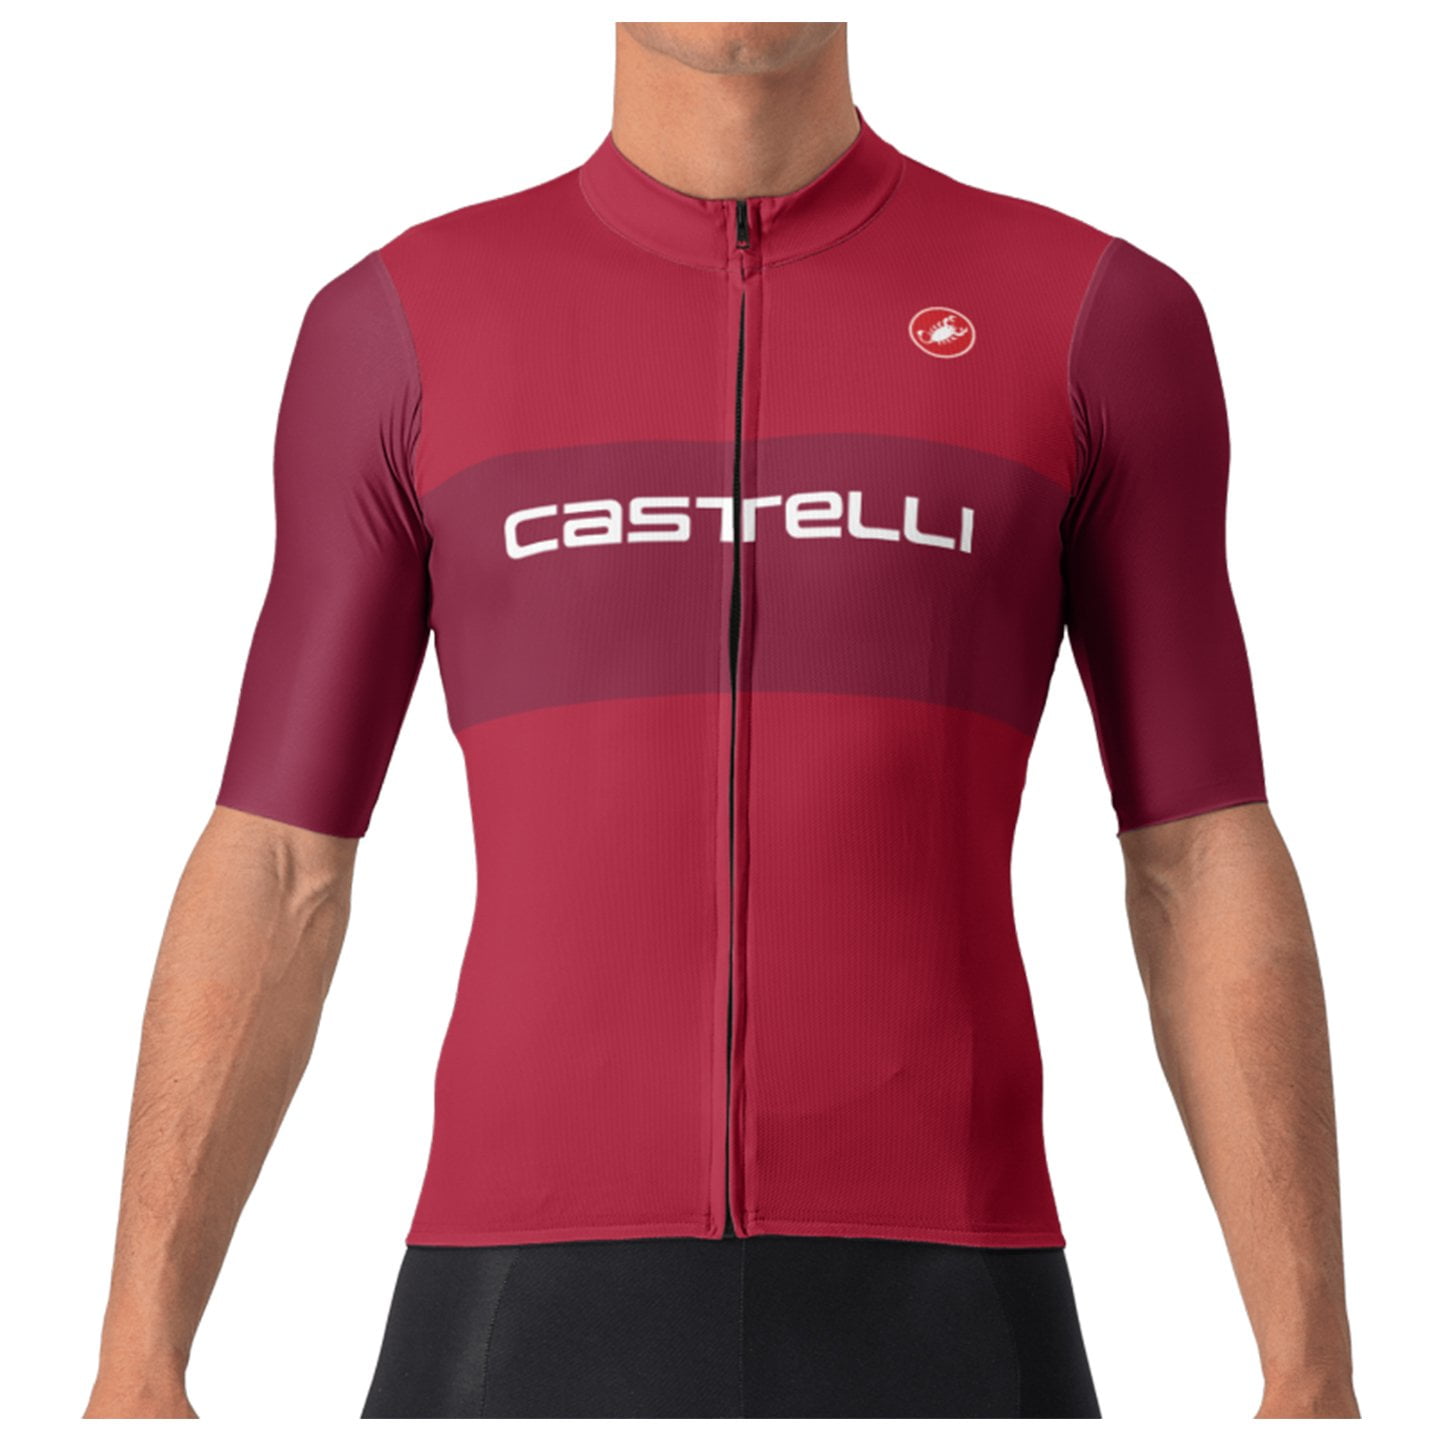 CASTELLI Fan Block Short Sleeve Jersey, for men, size M, Cycling jersey, Cycling clothing